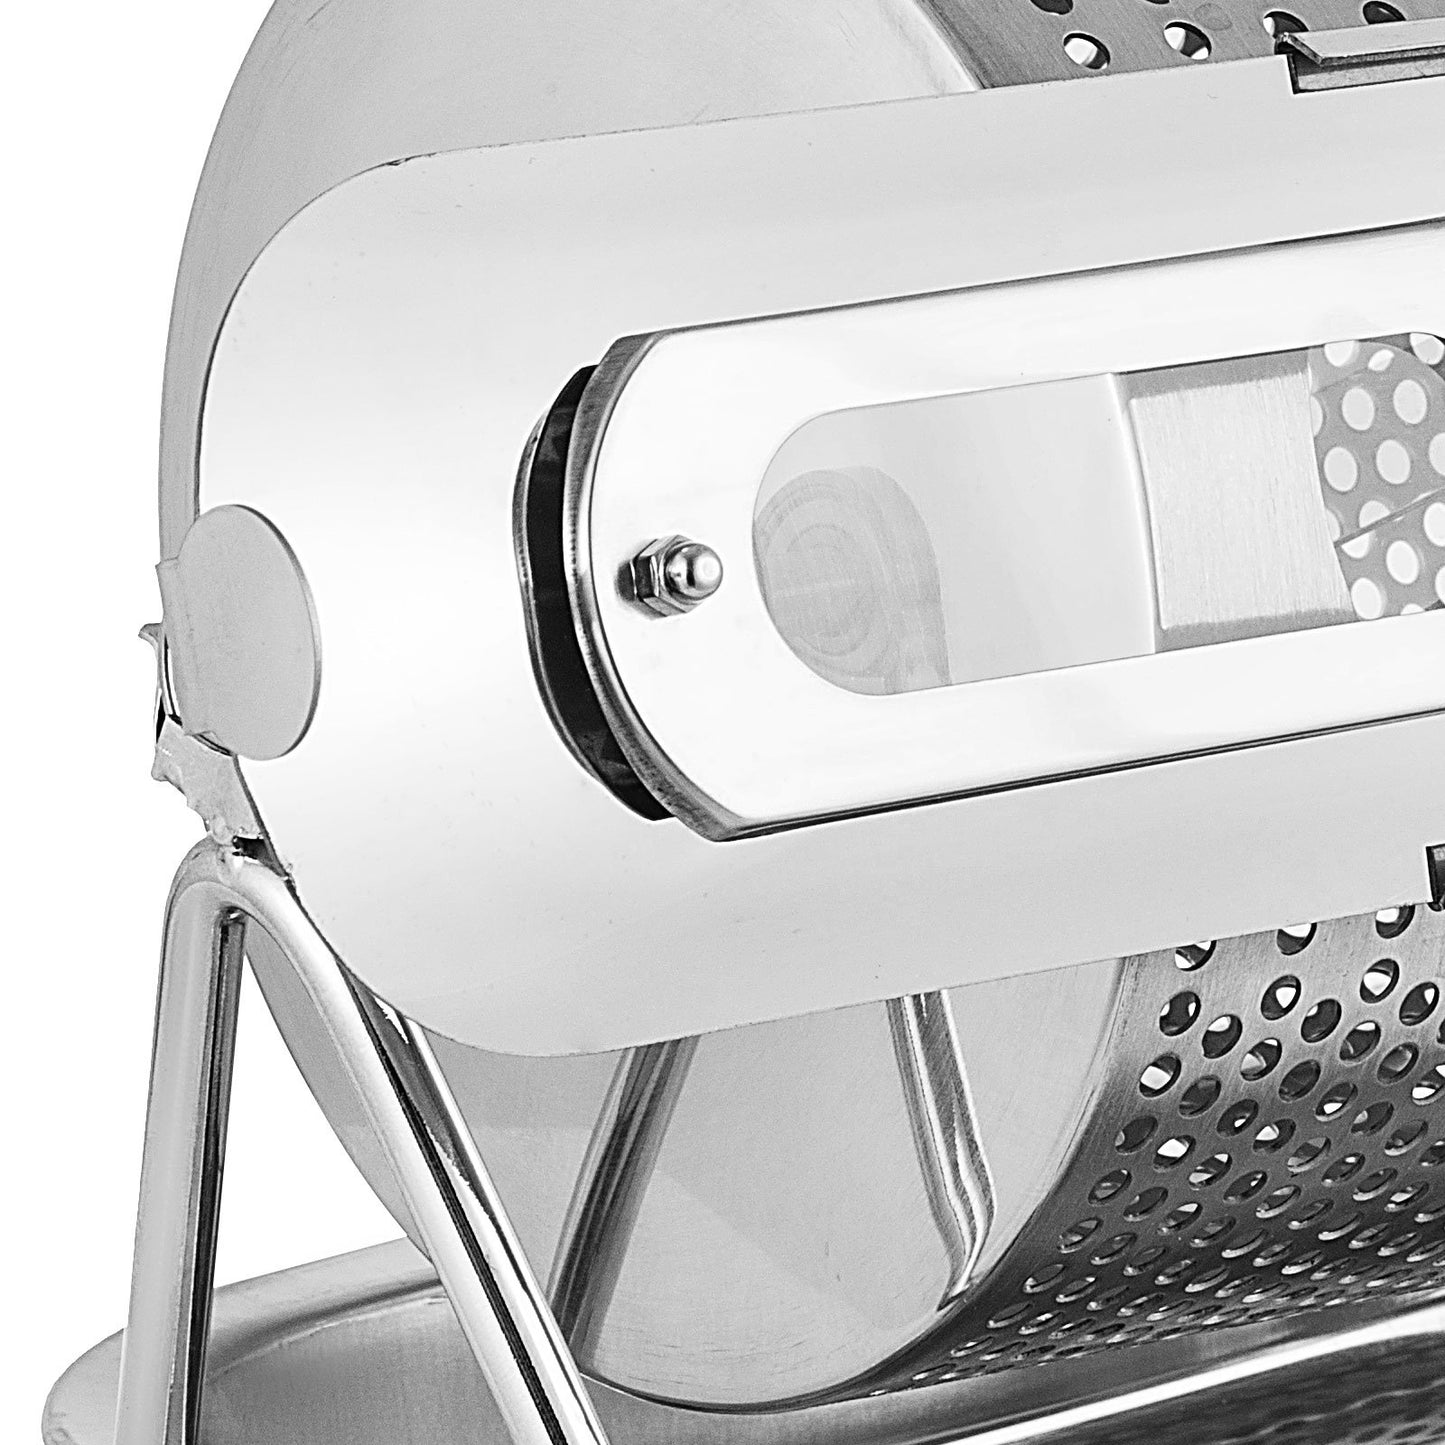 Stainless Steel Household Small Coffee Roasting Machine Roasting